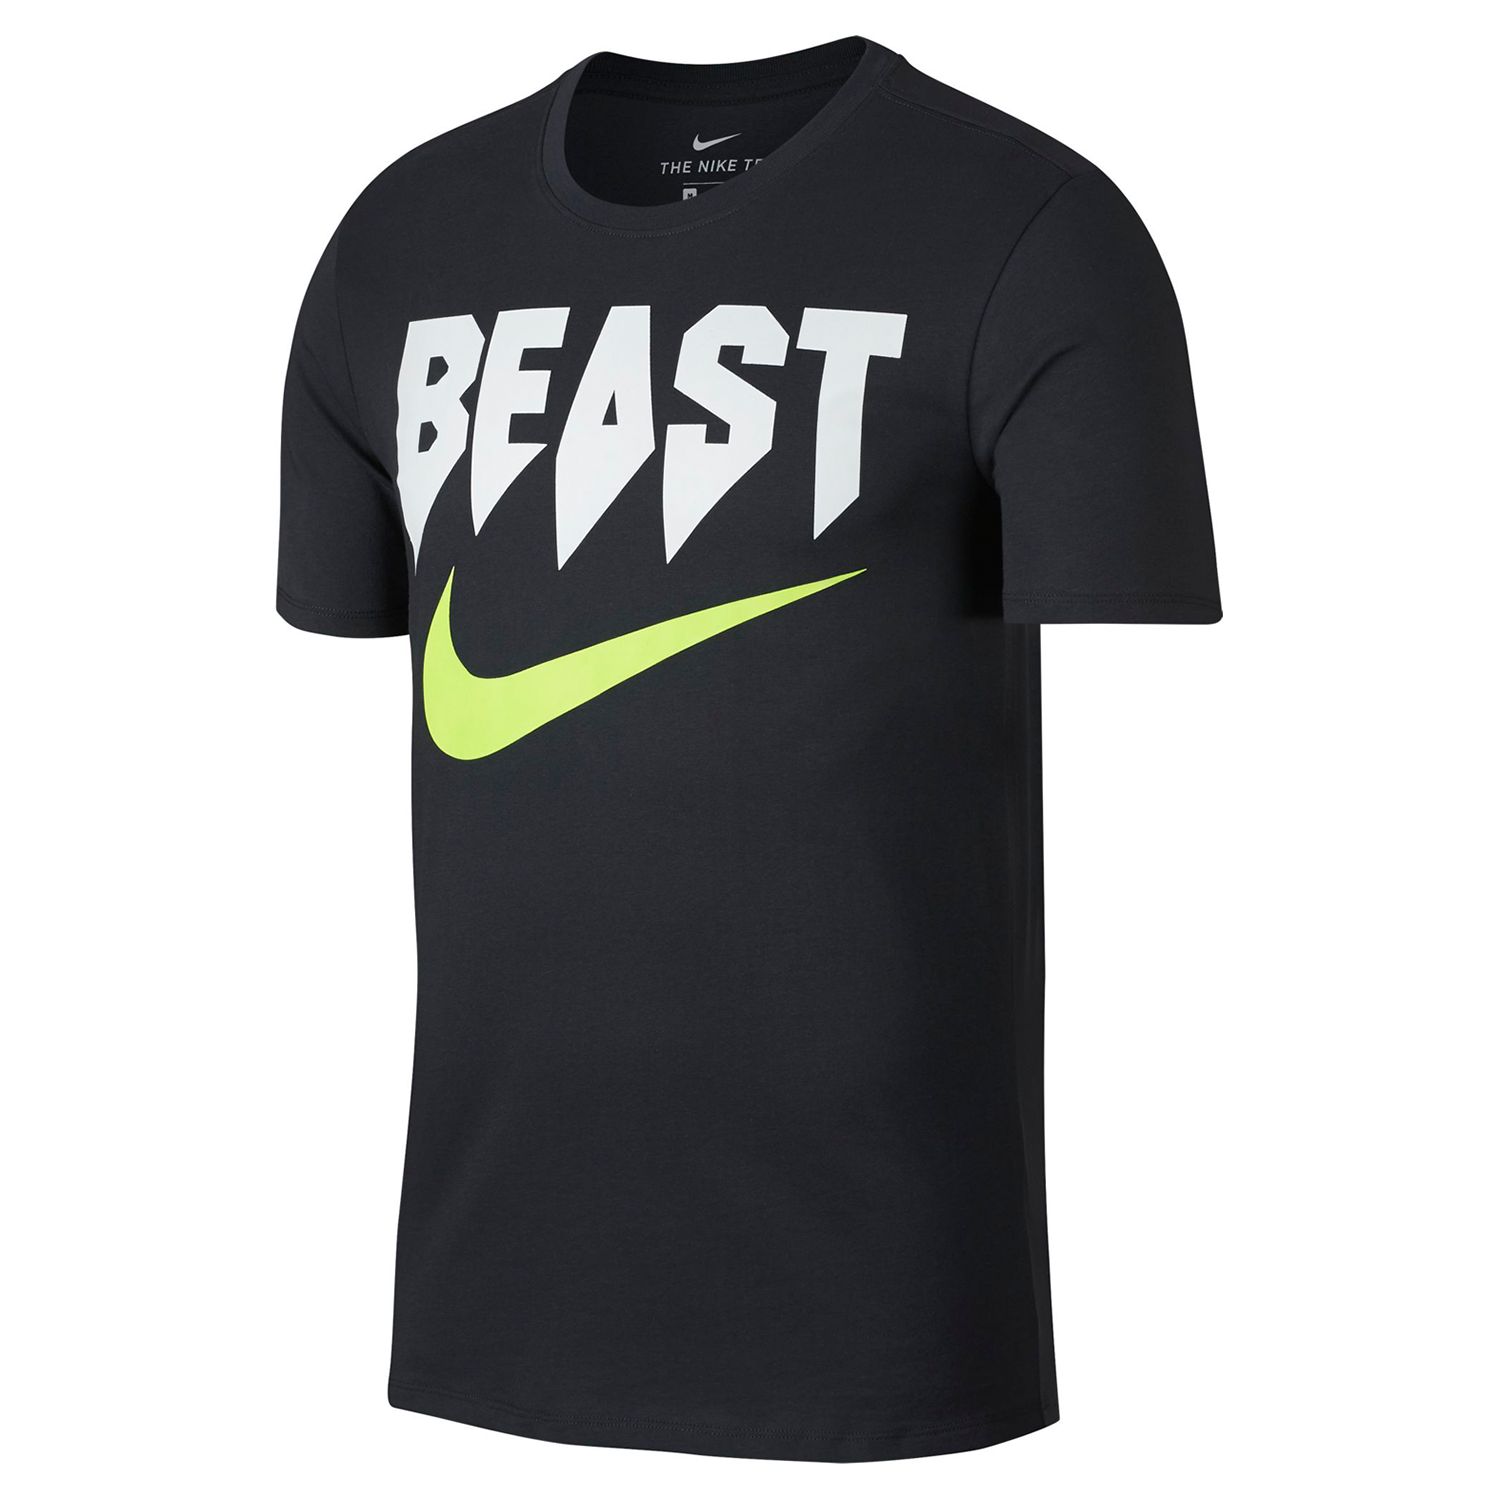 nike beast t shirt